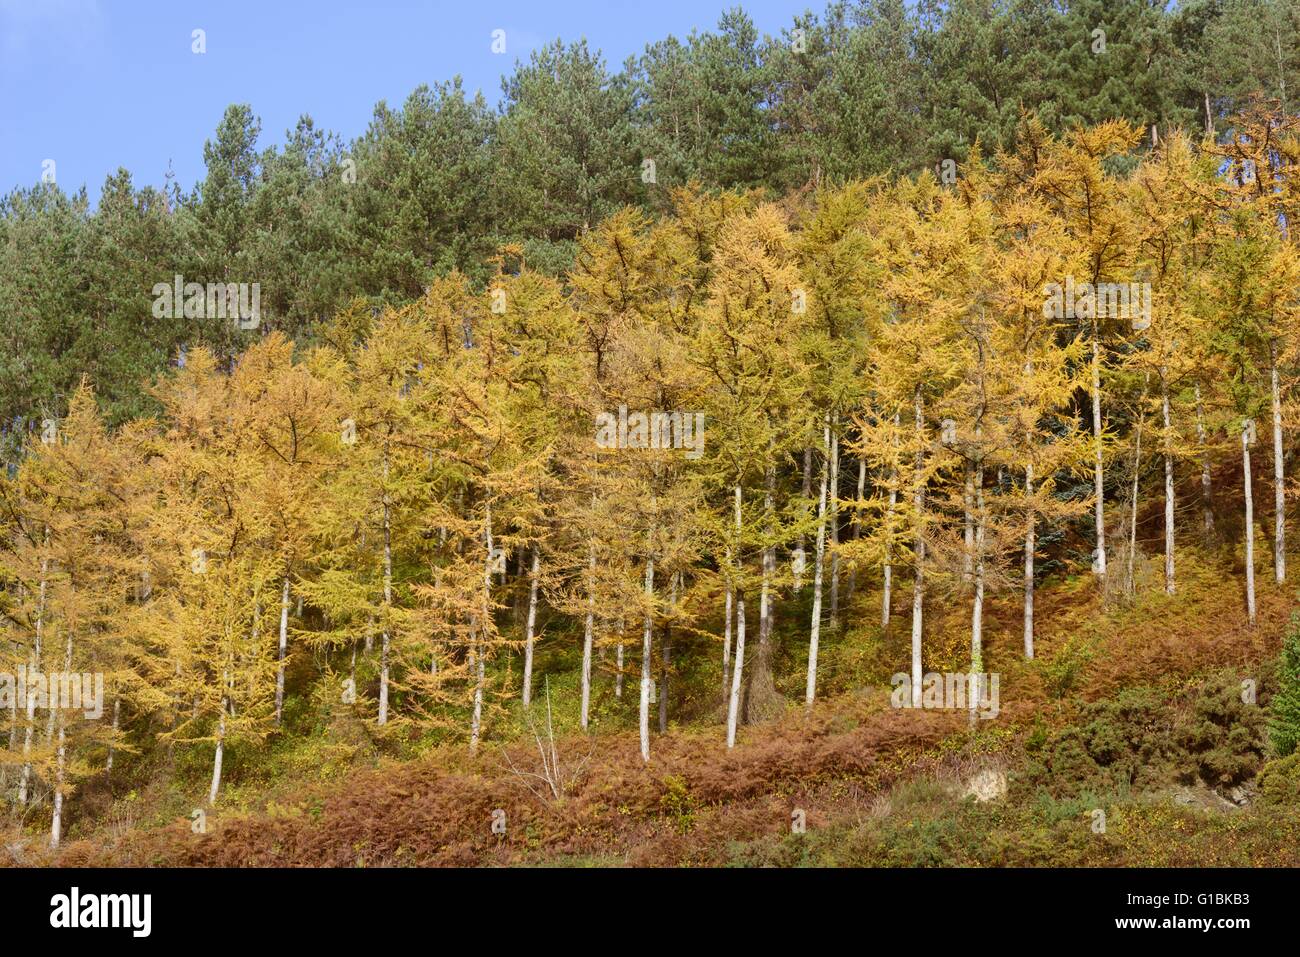 Plantation de mélèze, Larix kaempferi japonais et pin laricio Pinus nigra laricio, Galles, Royaume-Uni Banque D'Images